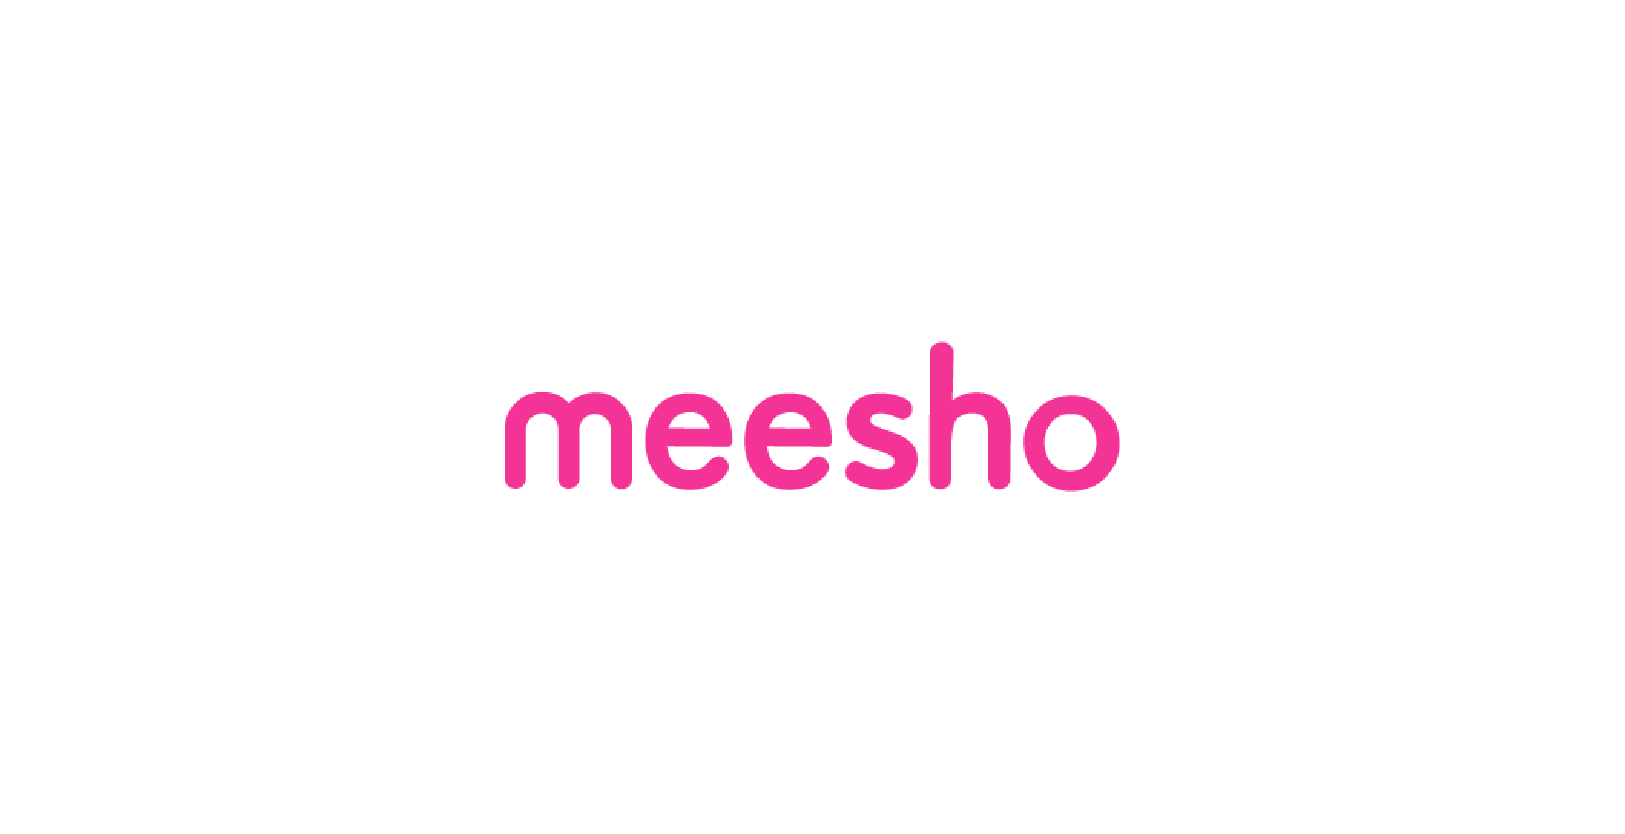 Vision Fund investment portfolio company Meesho's logo